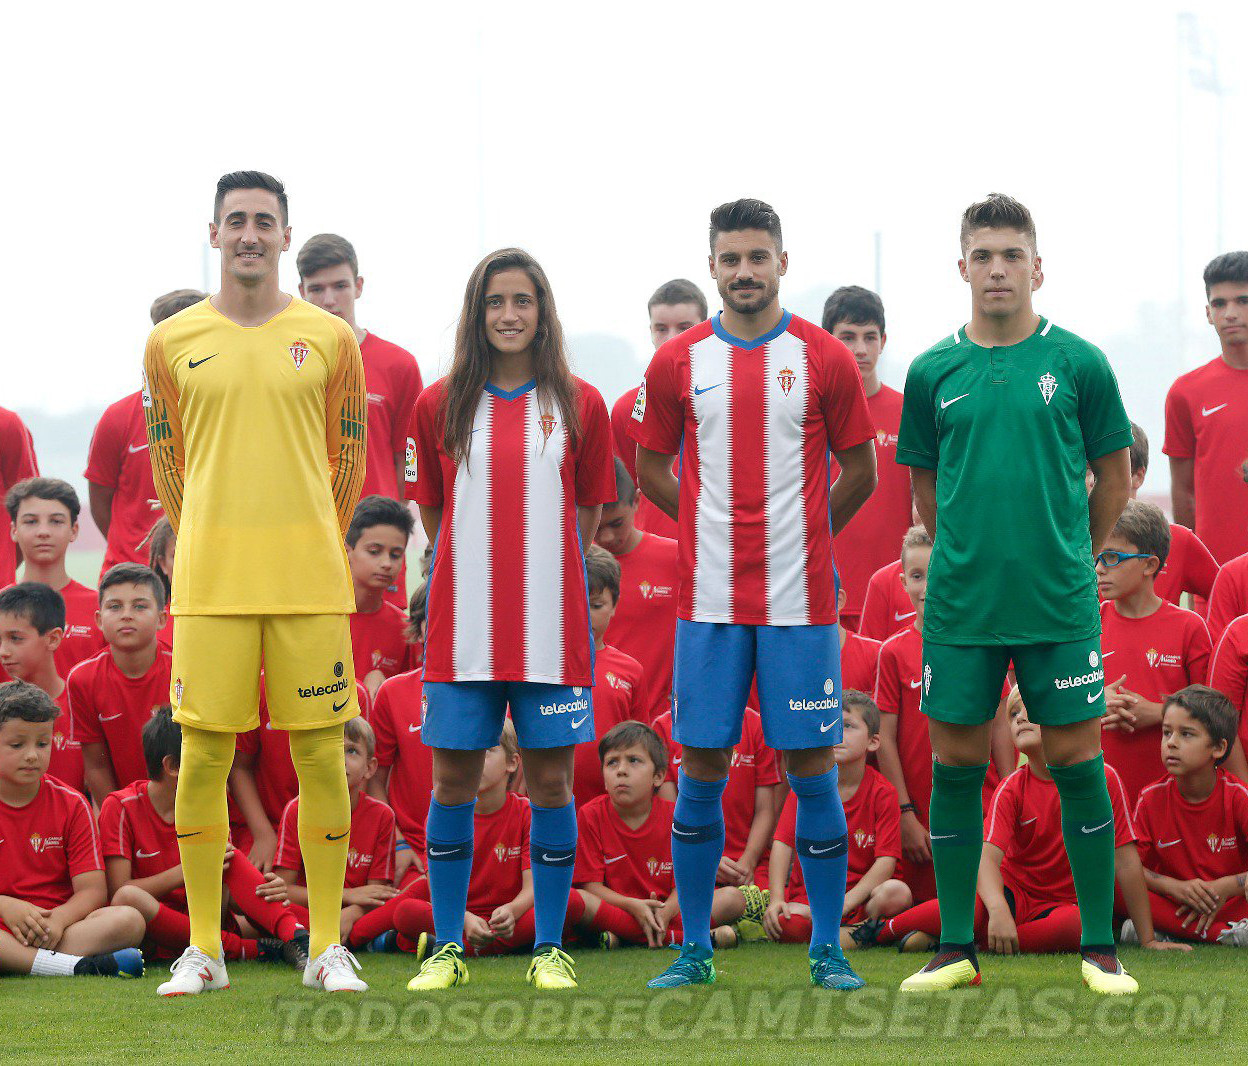 Camisetas Nike de Sporting Gijón 2018-19